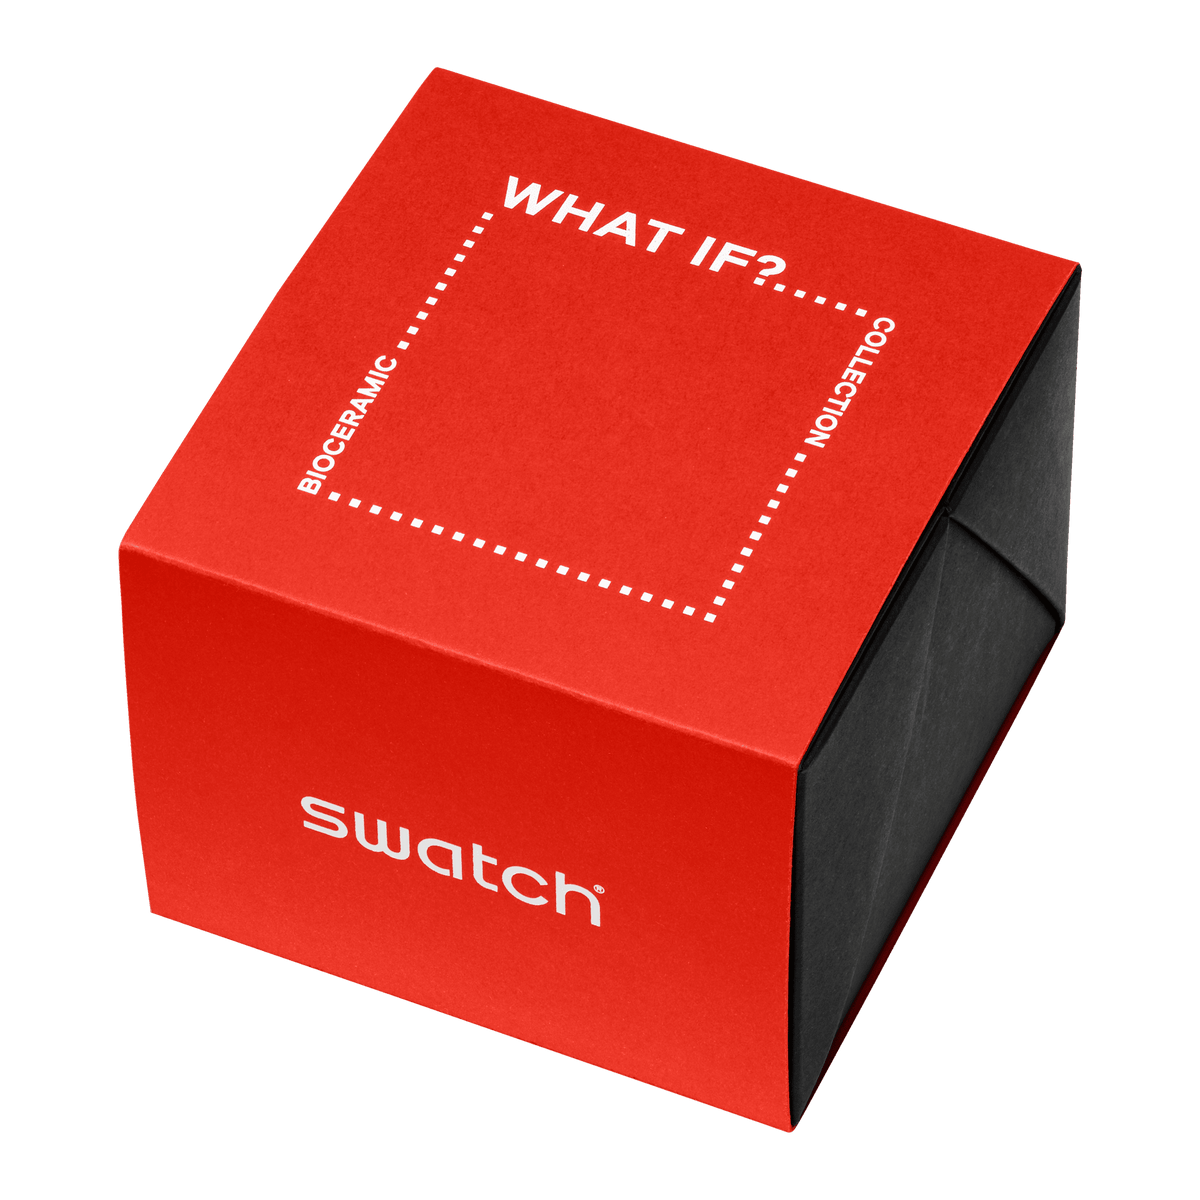 Swatch Watch - What if... Beige?